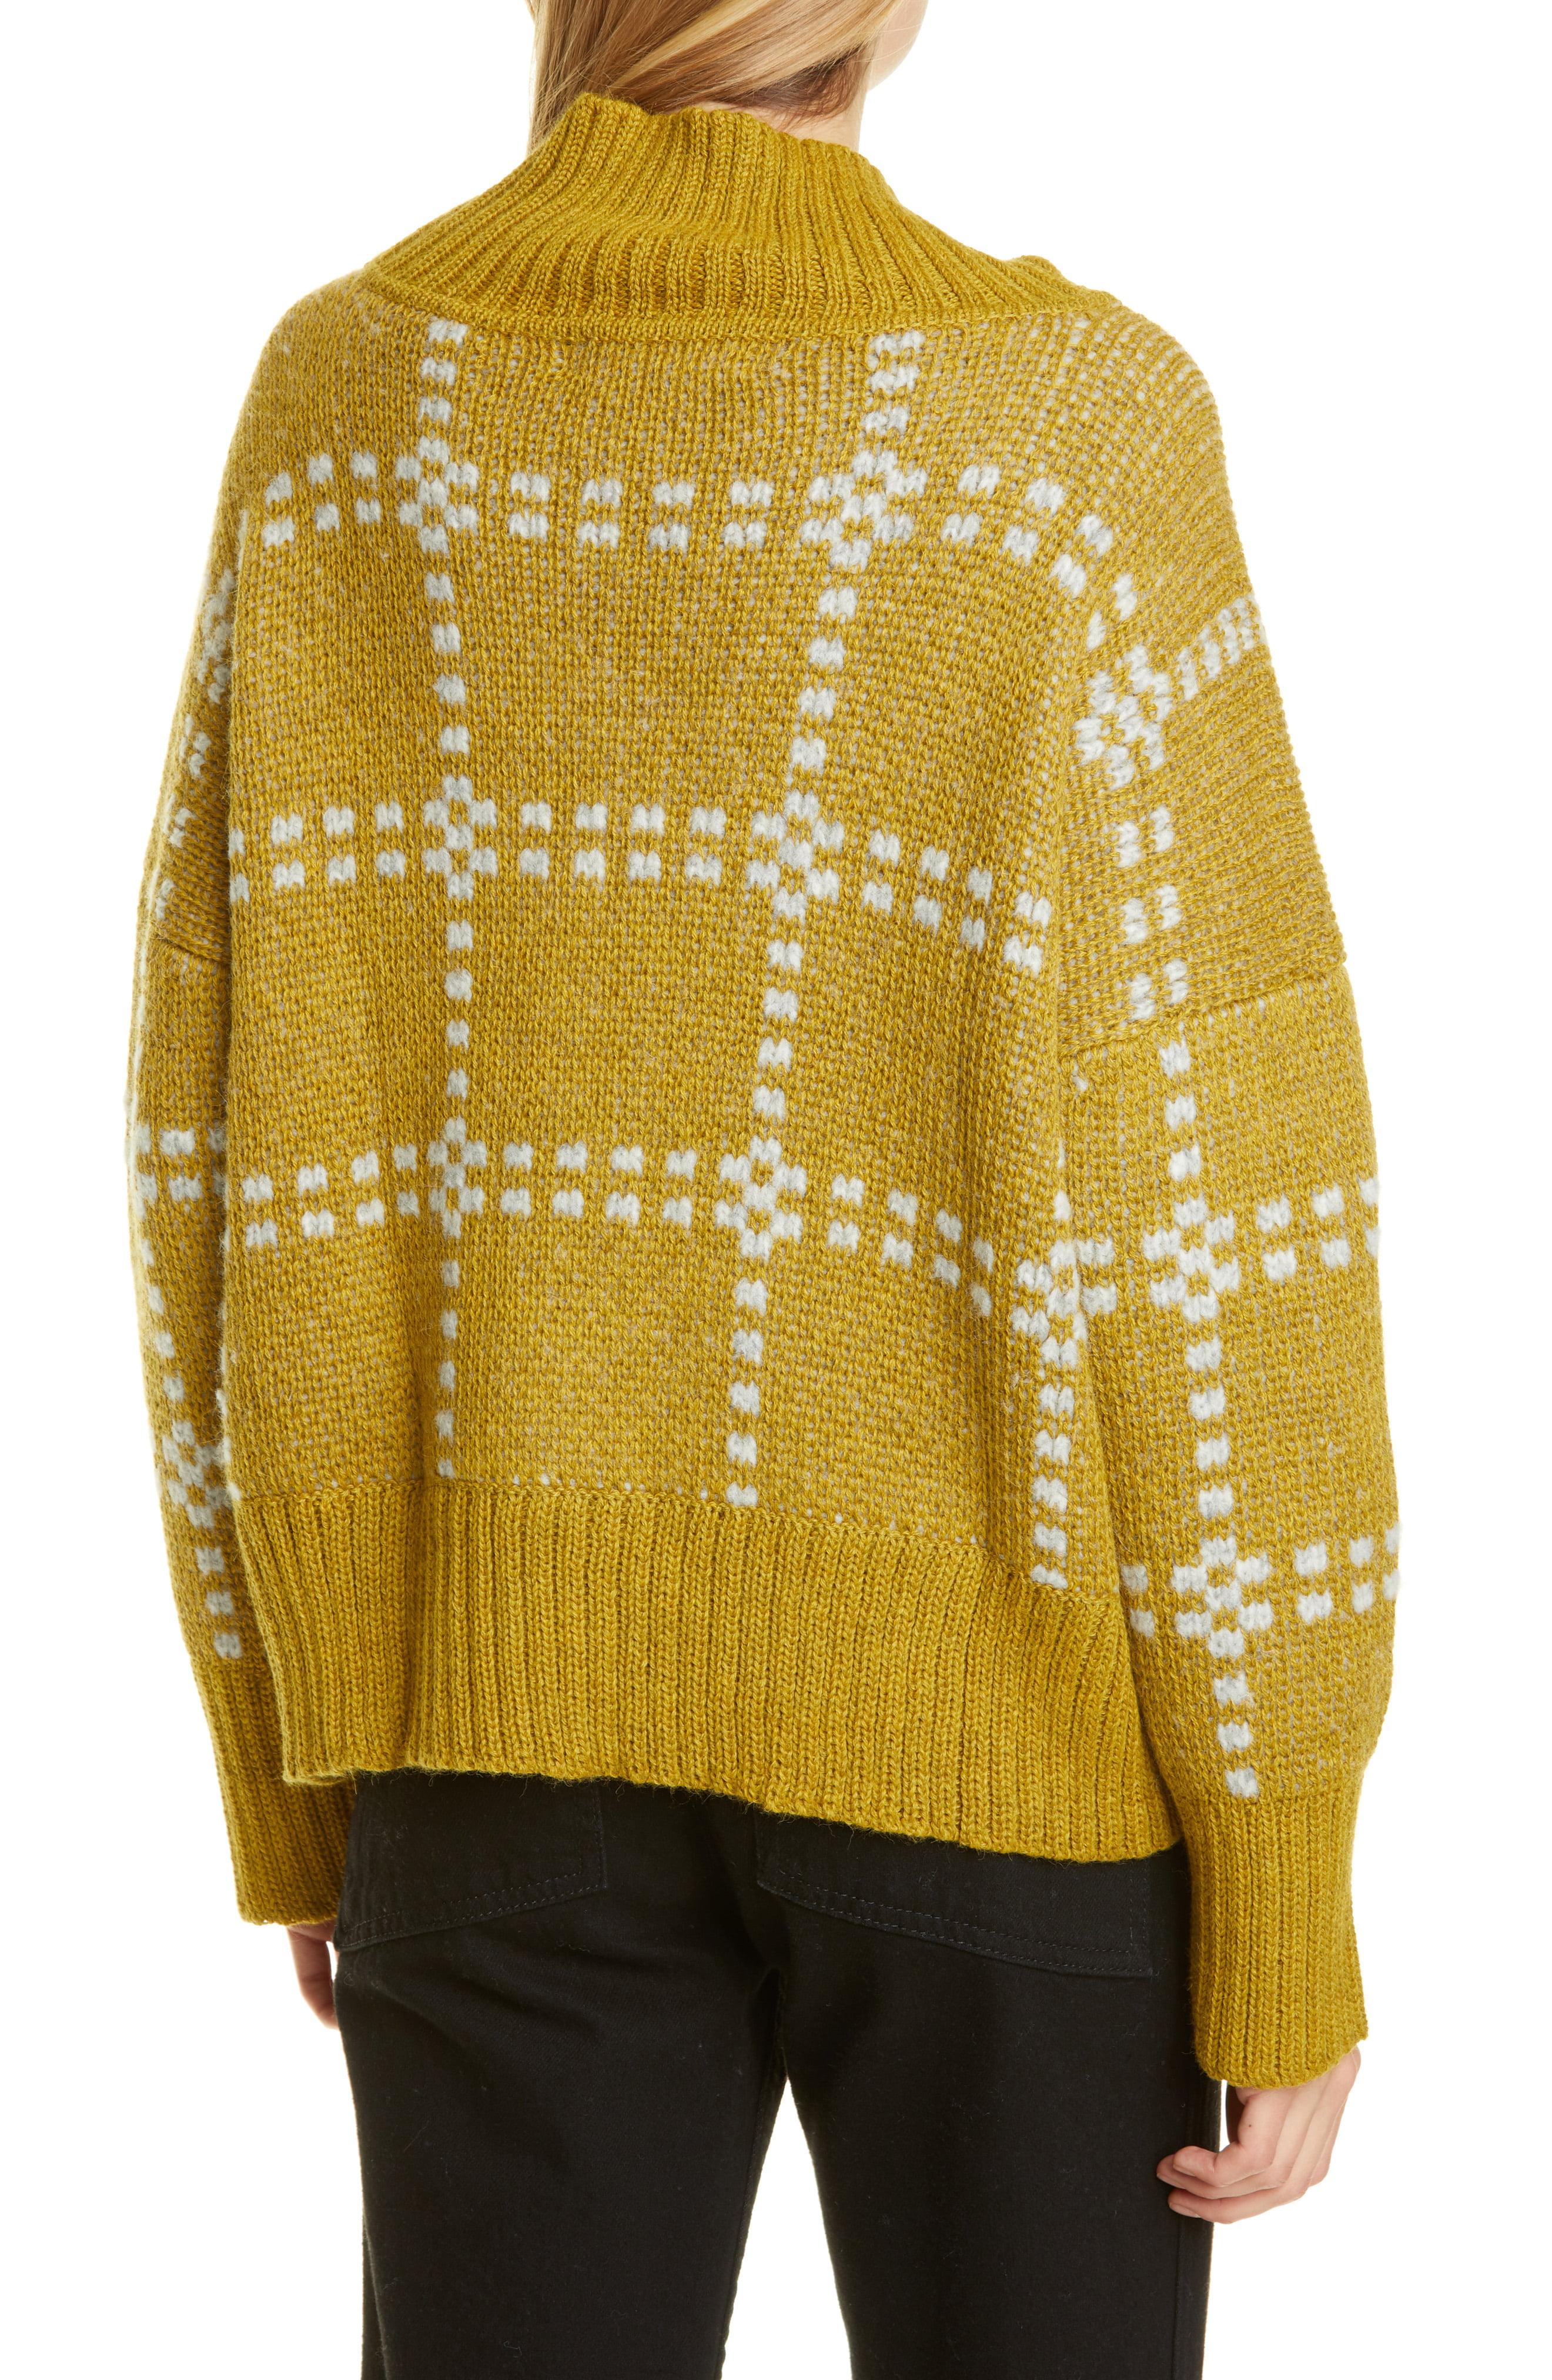 Eckhaus Latta Check Alpaca Blend Sweater in Yellow - Lyst